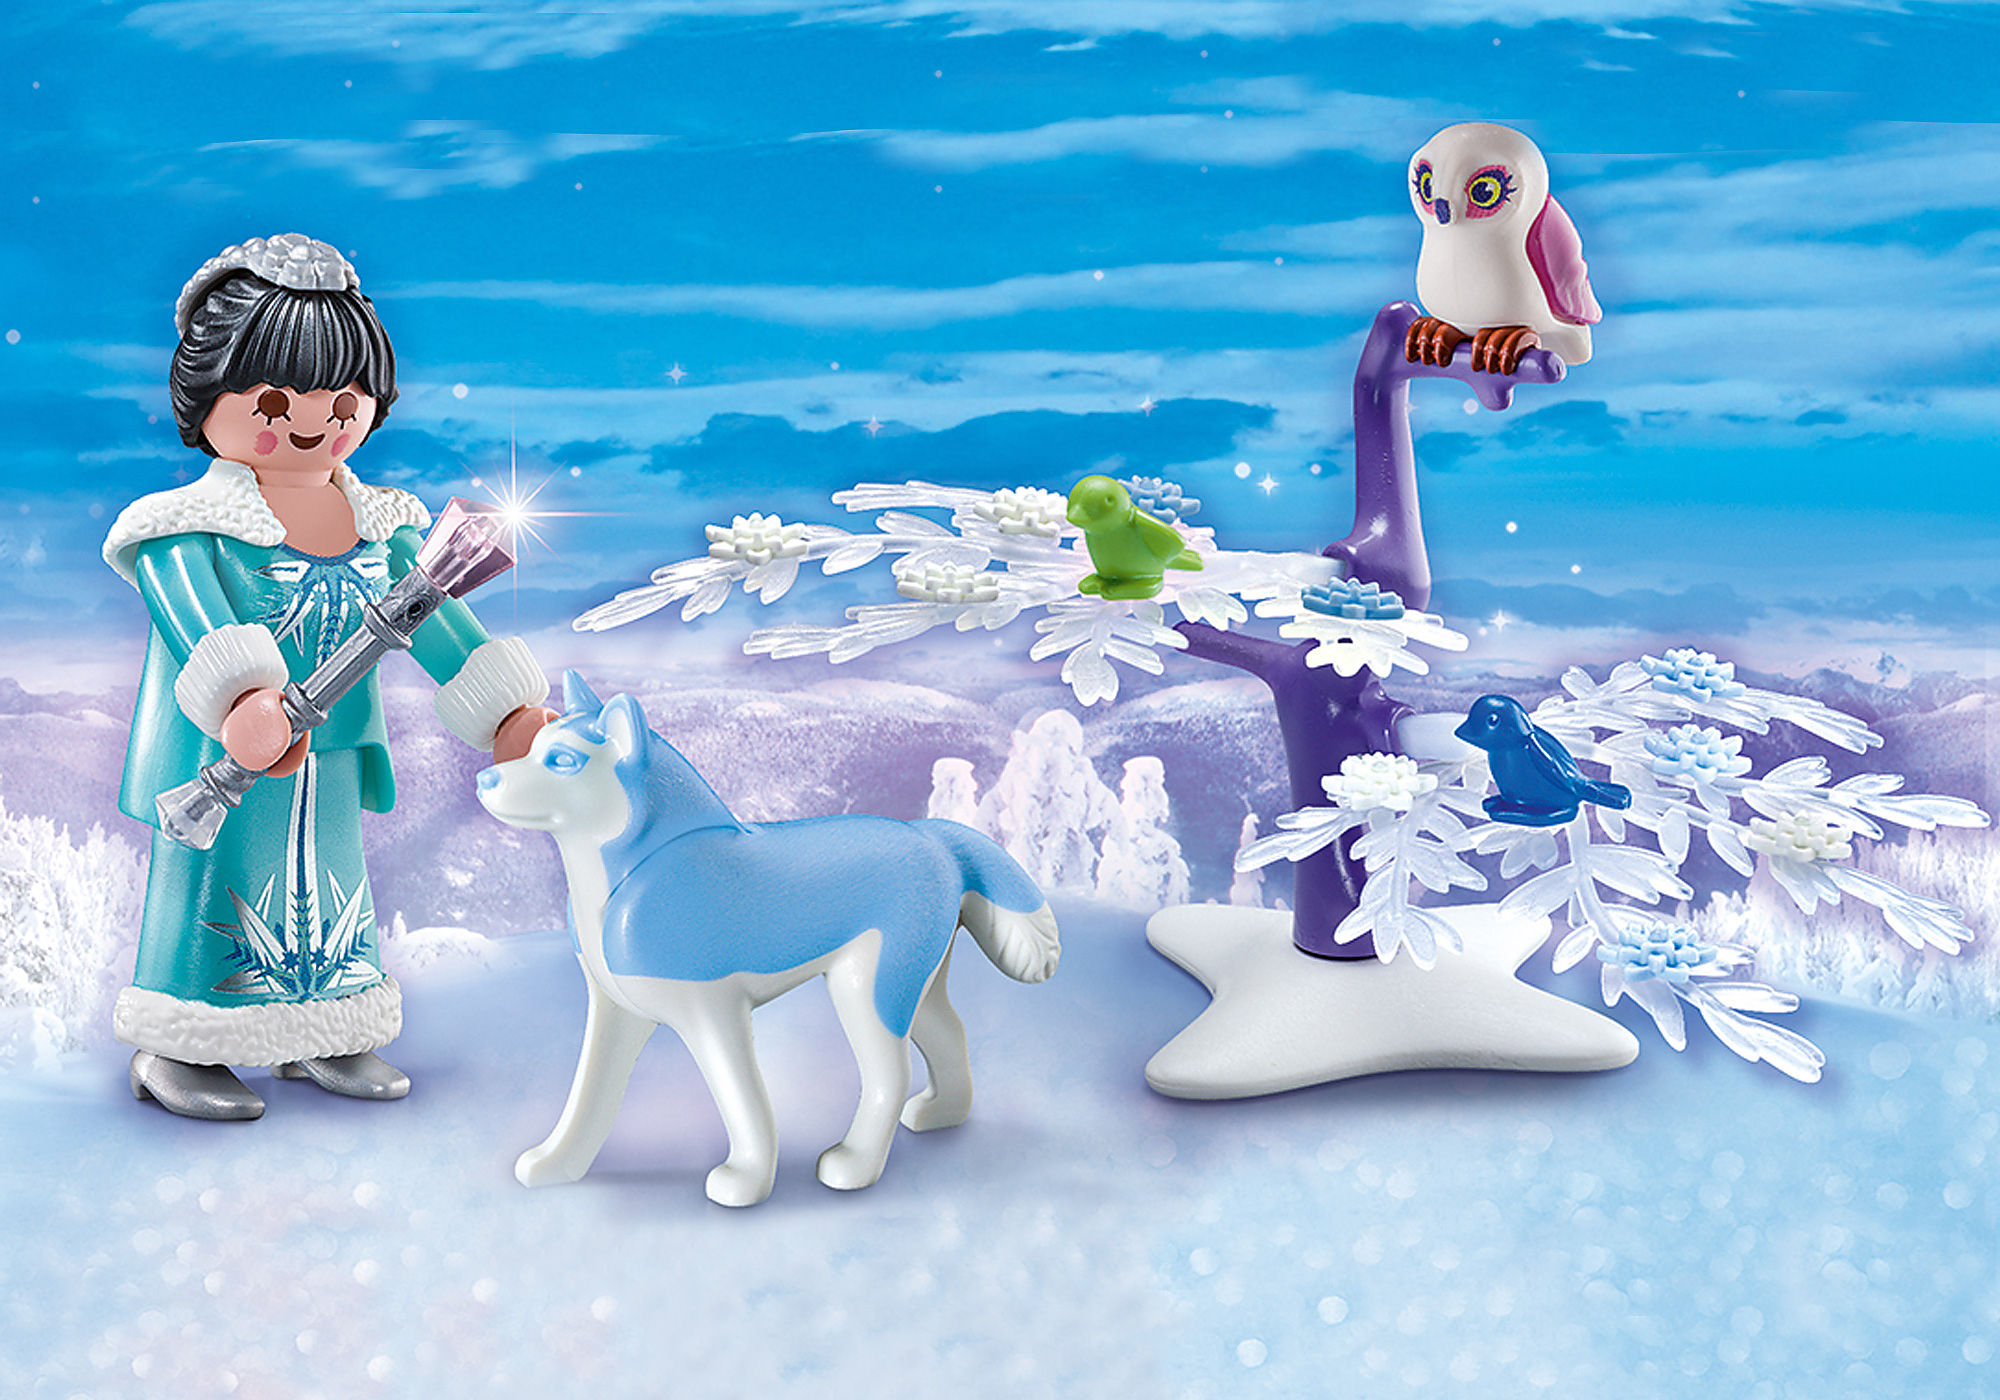 Ice Princess - Playmobil Figures: Series 11 9147